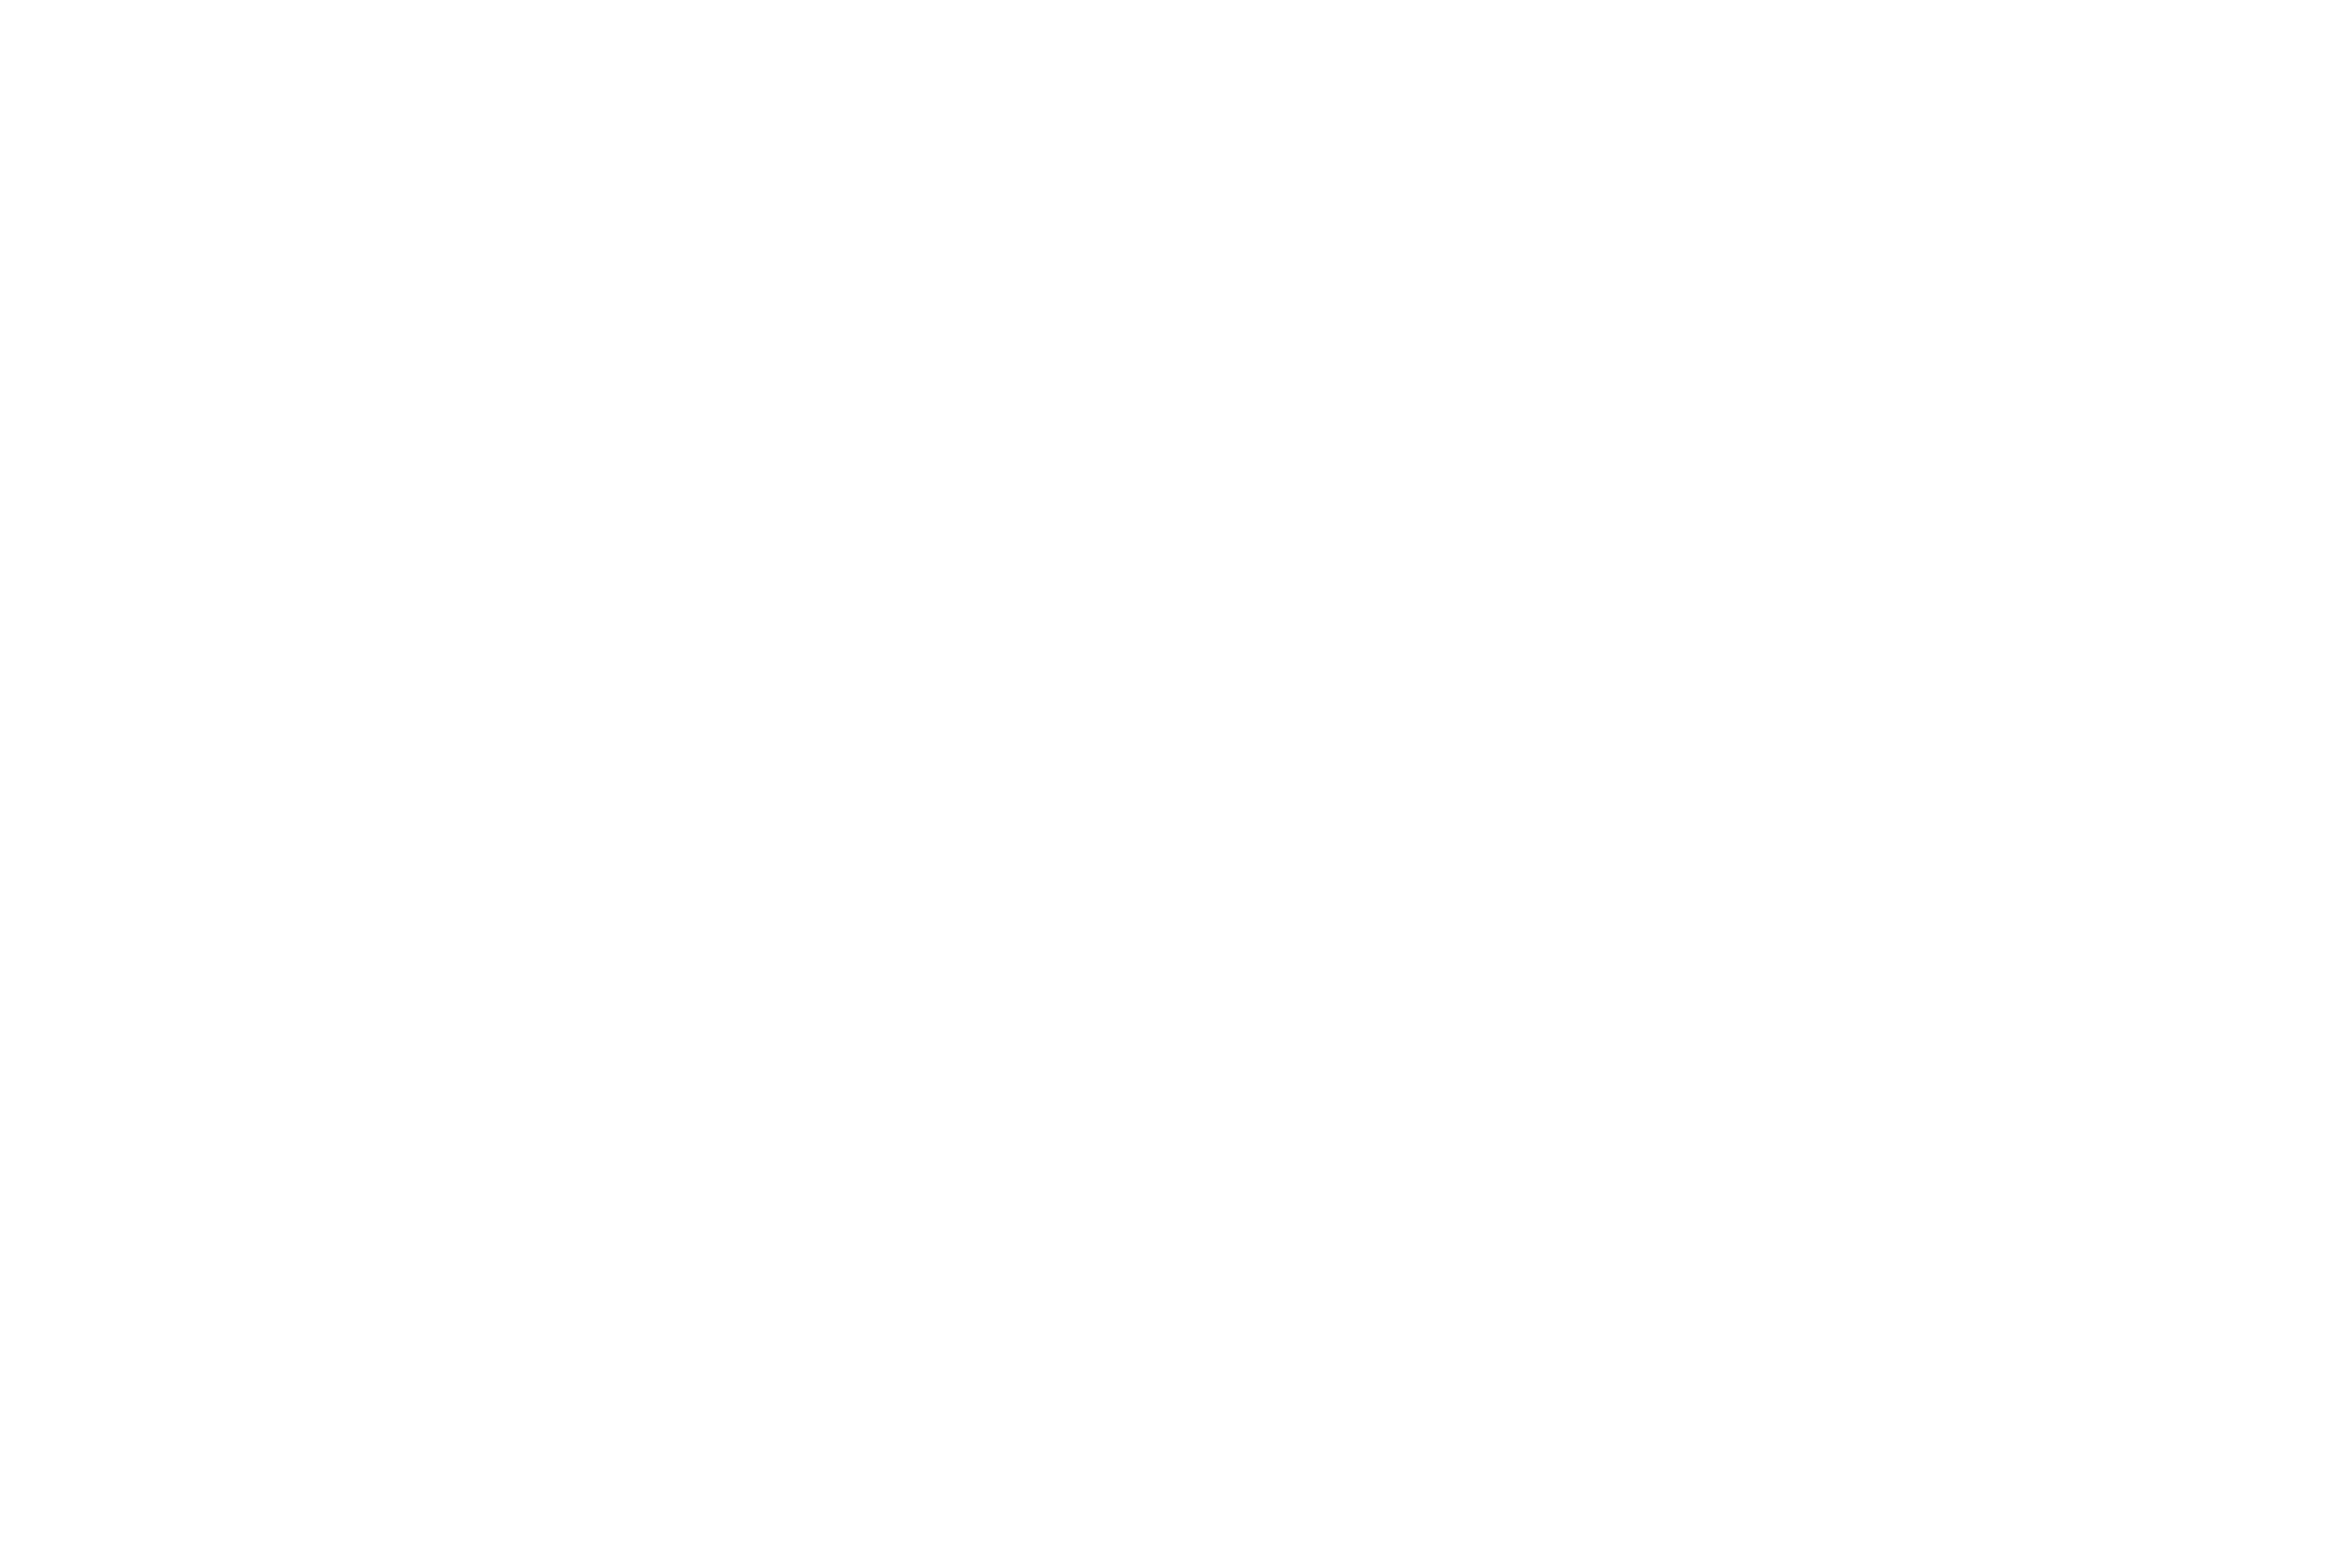 Panavision_Grip_Remote_logo_2021_white